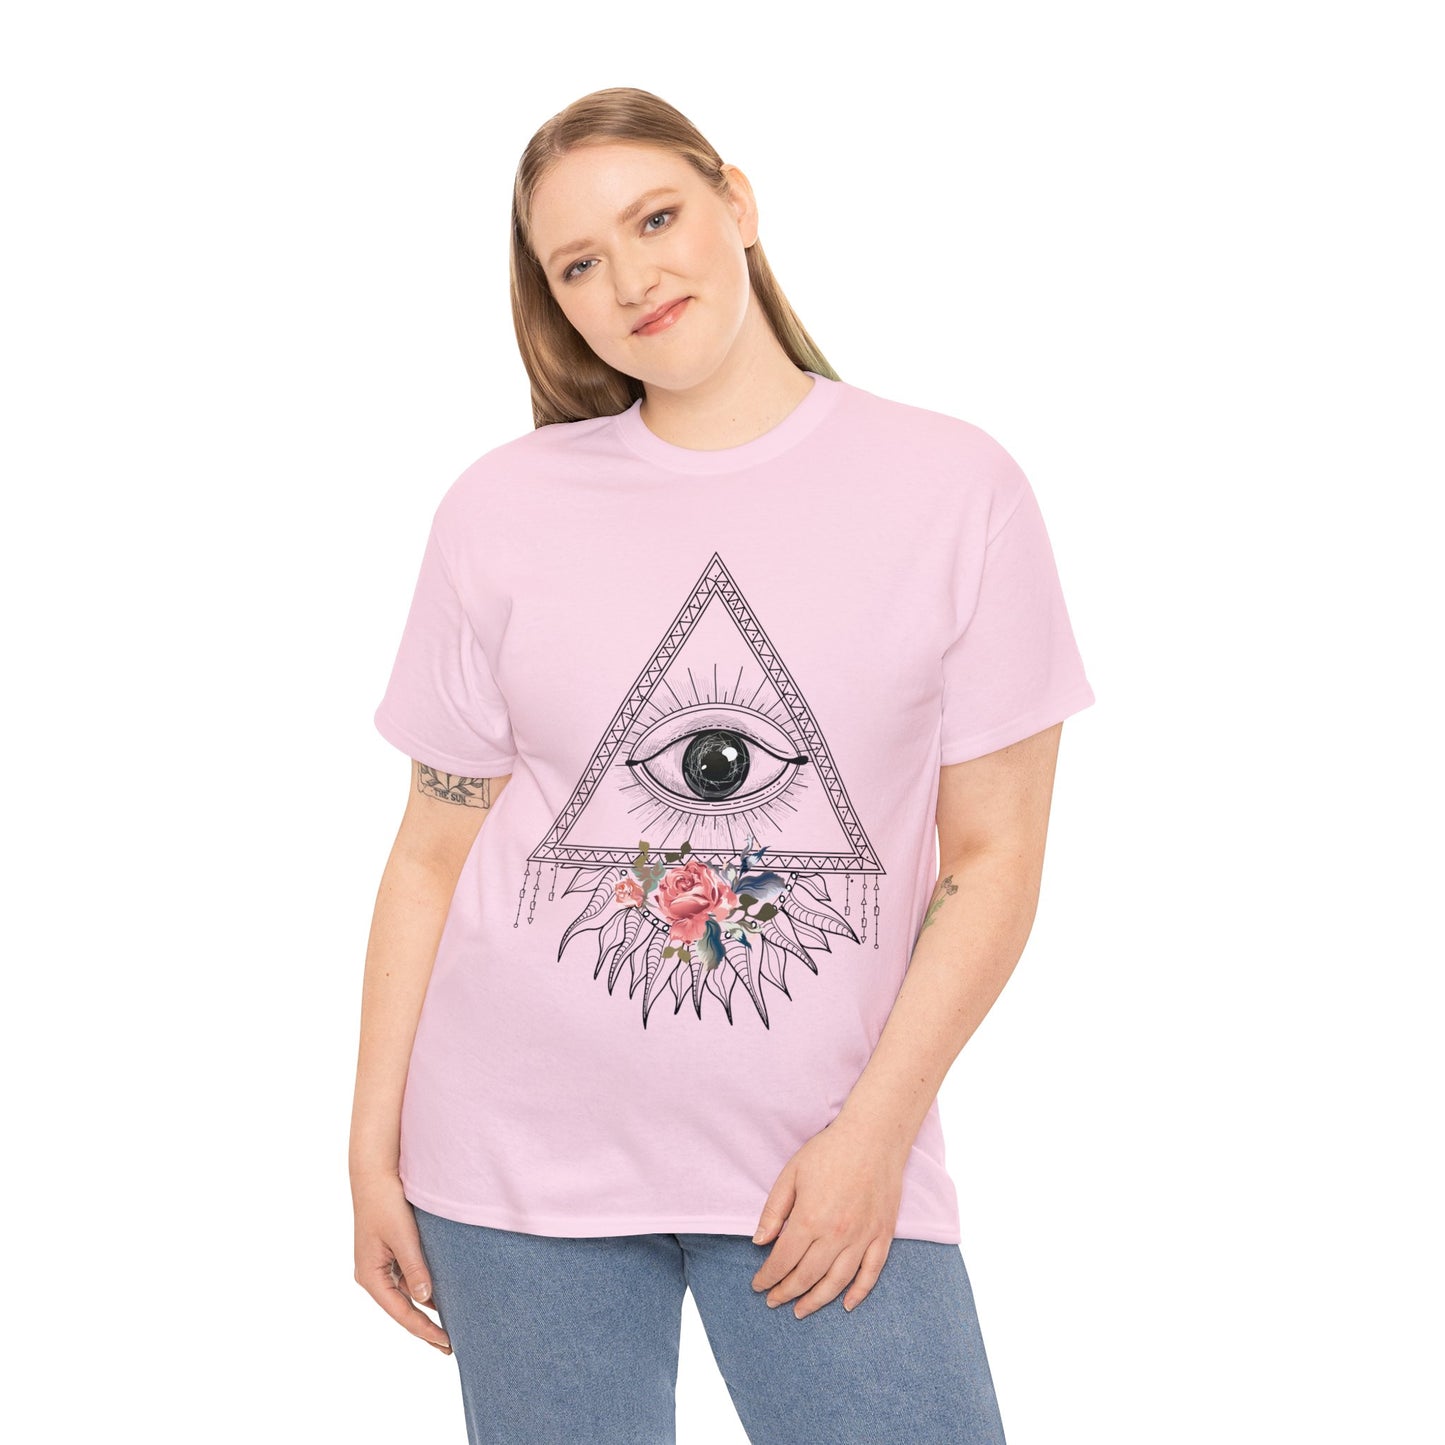 Illuminati Eye Triangle Flower Design Popular Culture Graphic Tee